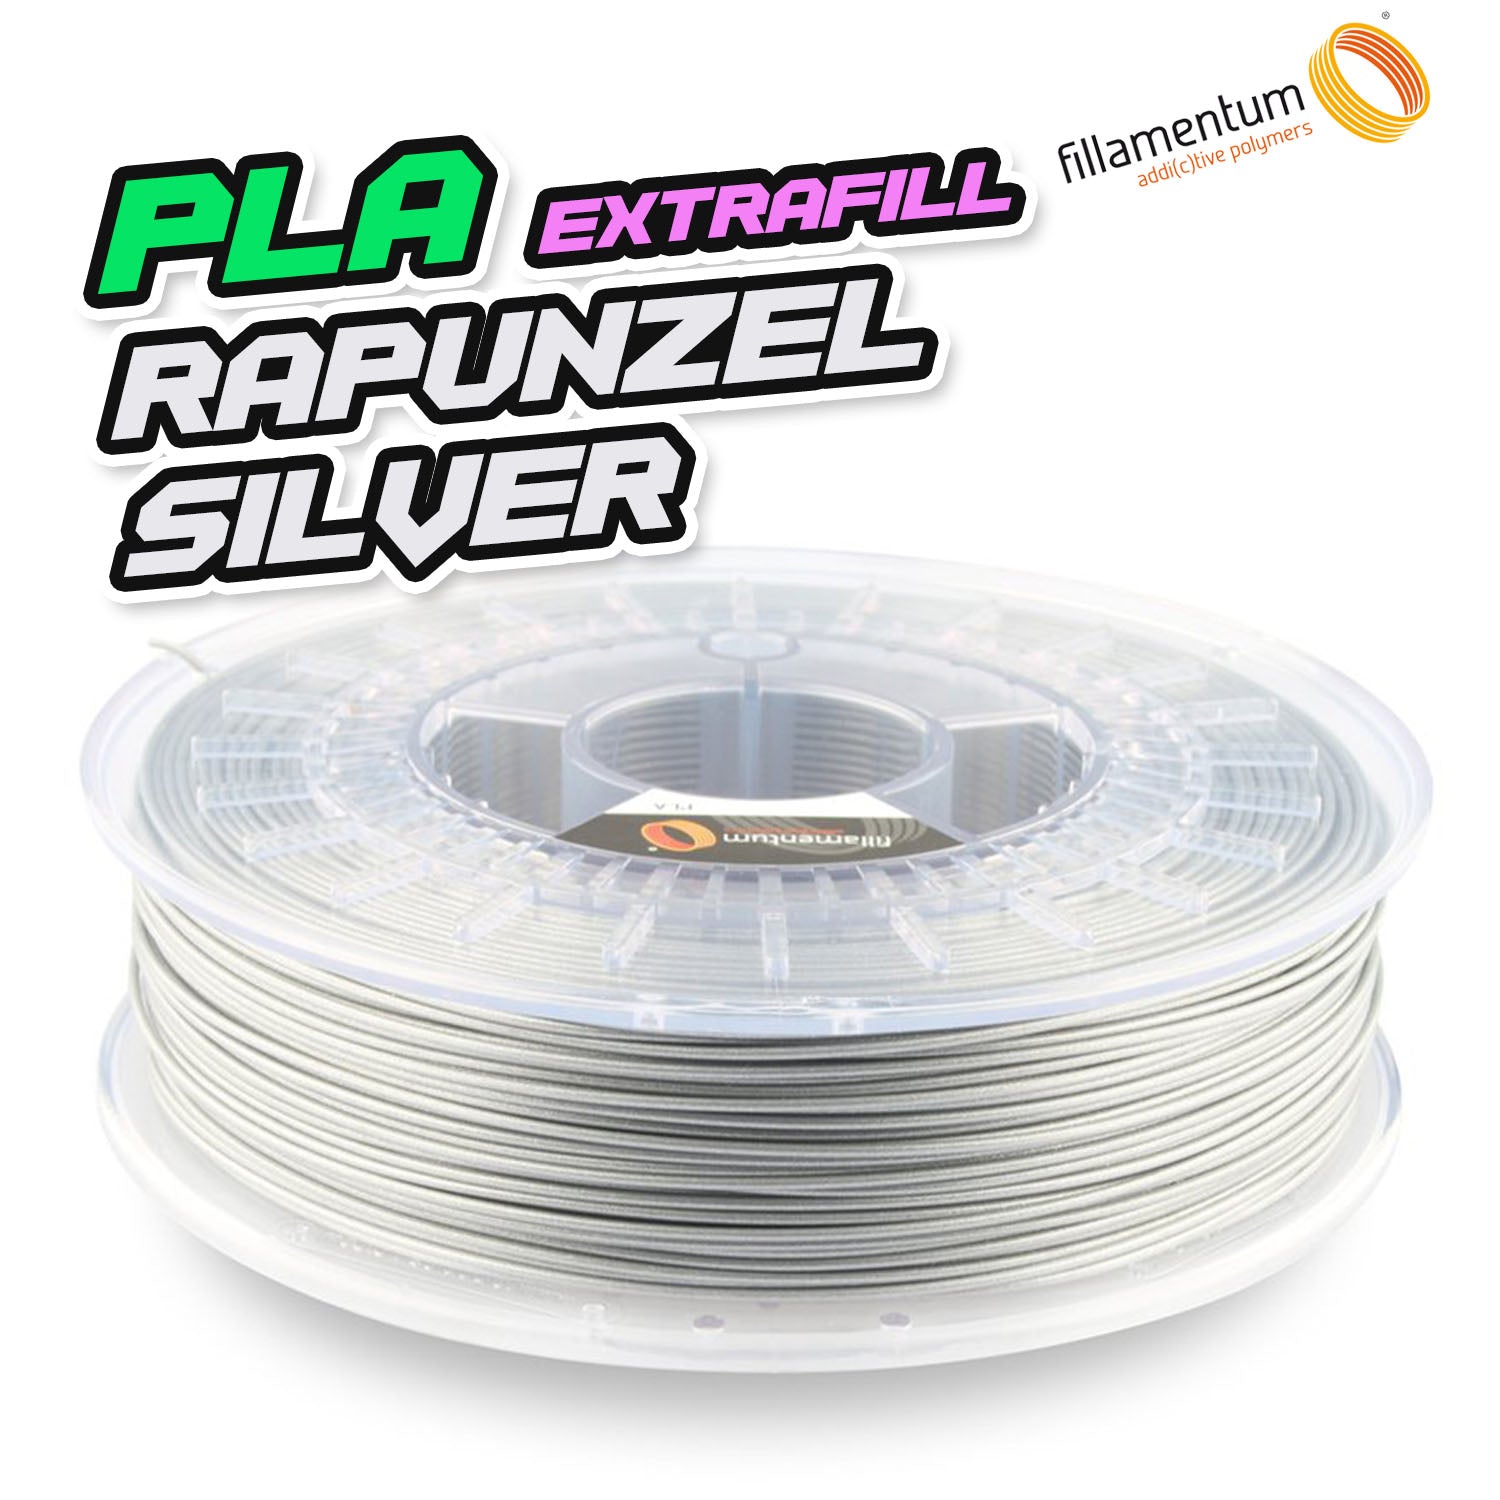 Fillamentum PLA Extrafill - Rapunzel Silver [1.75mm] (35,87€/Kg)